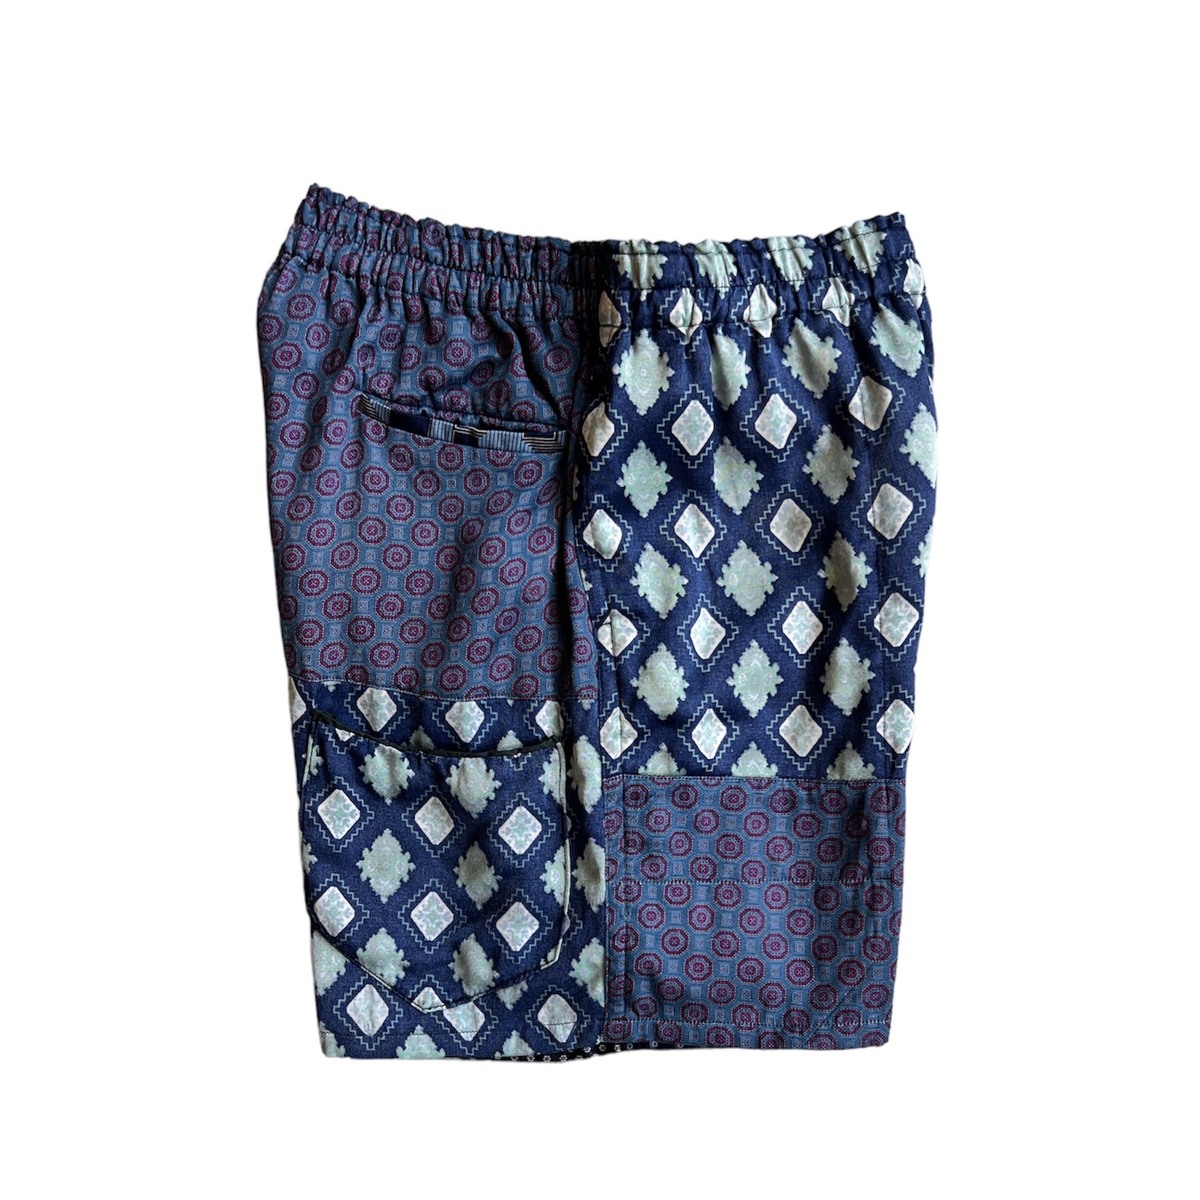 OLDPARK P.B shorts - 画像3枚目